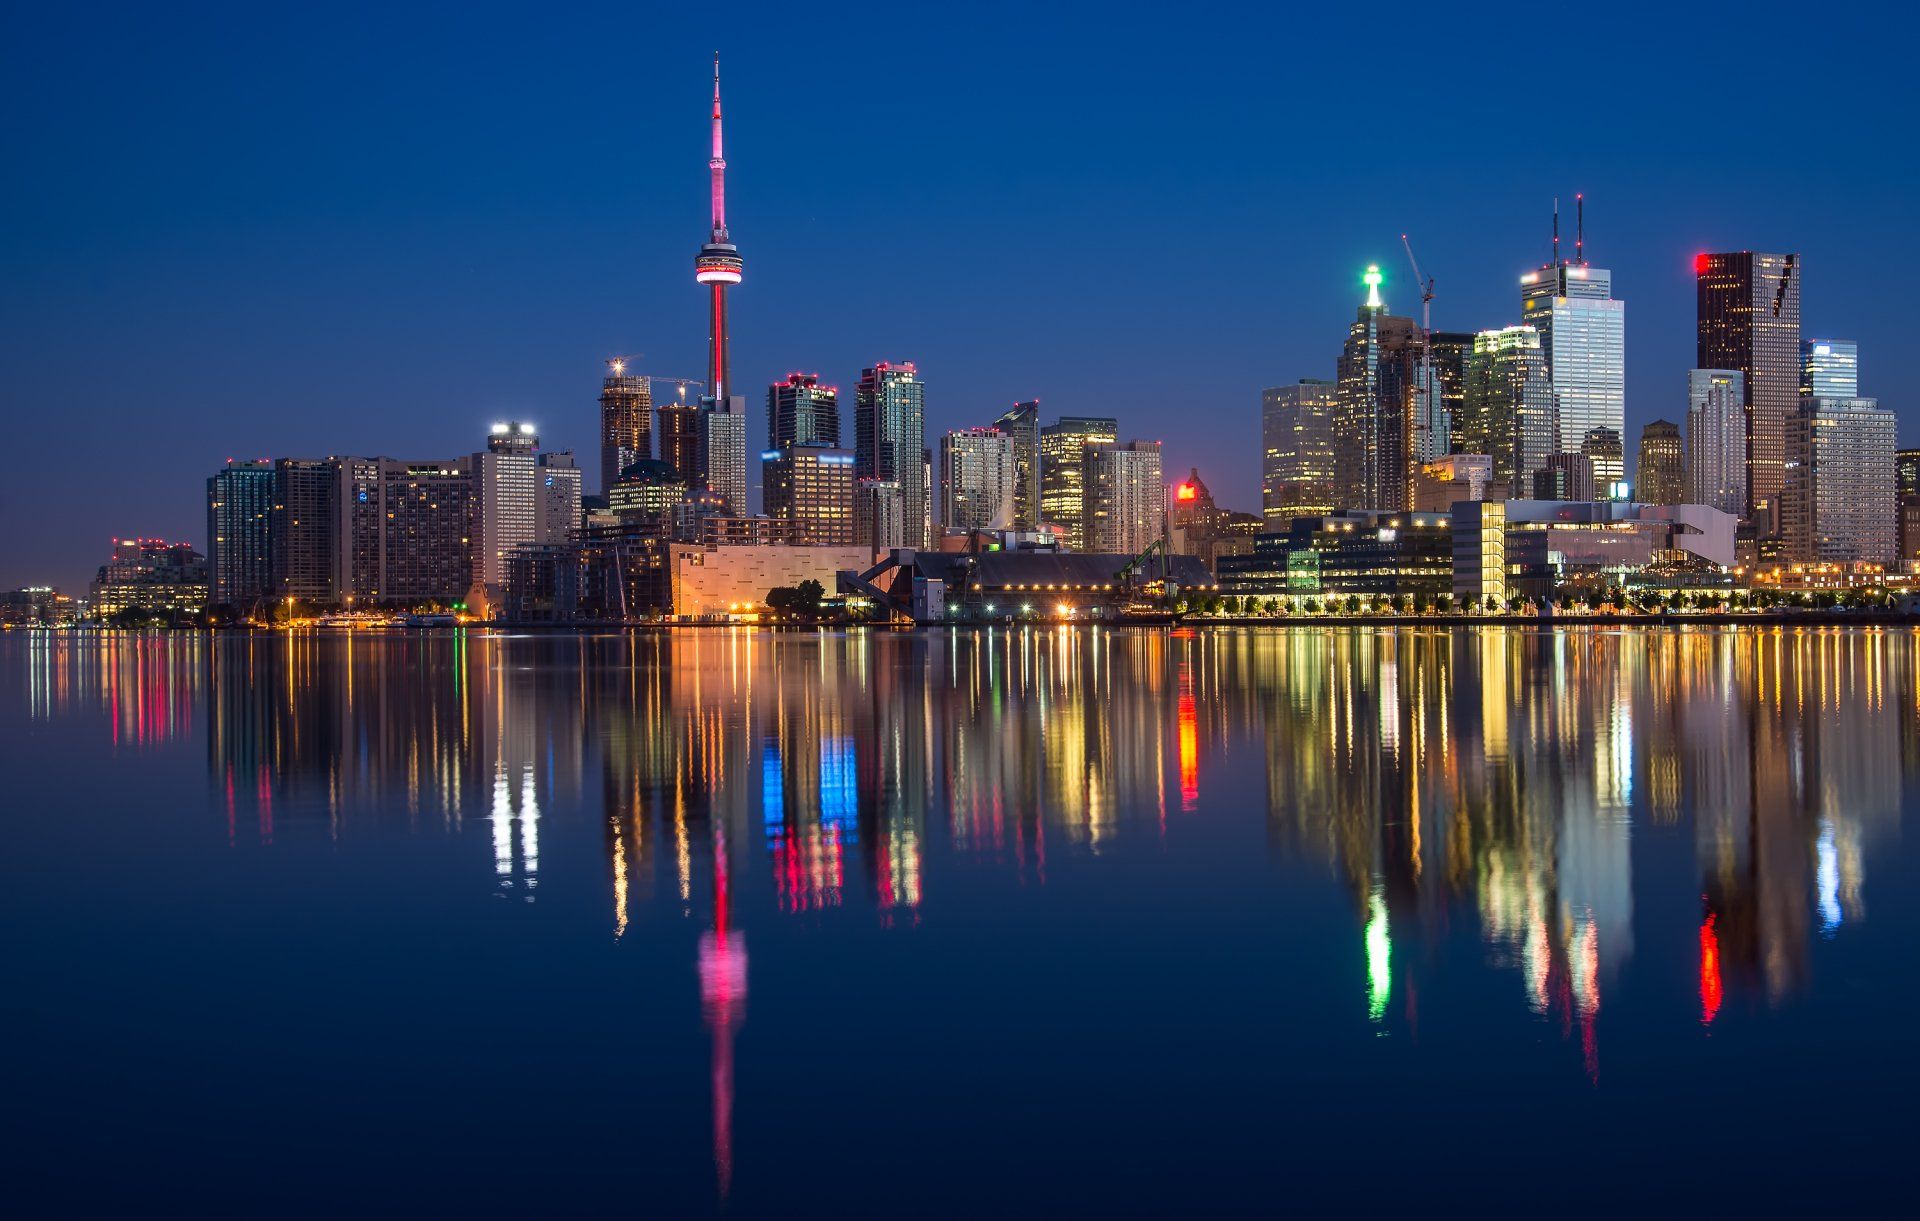 Amazing Night View of Toronto, Canada - USA and Canada Holidays Barter's Travelnet